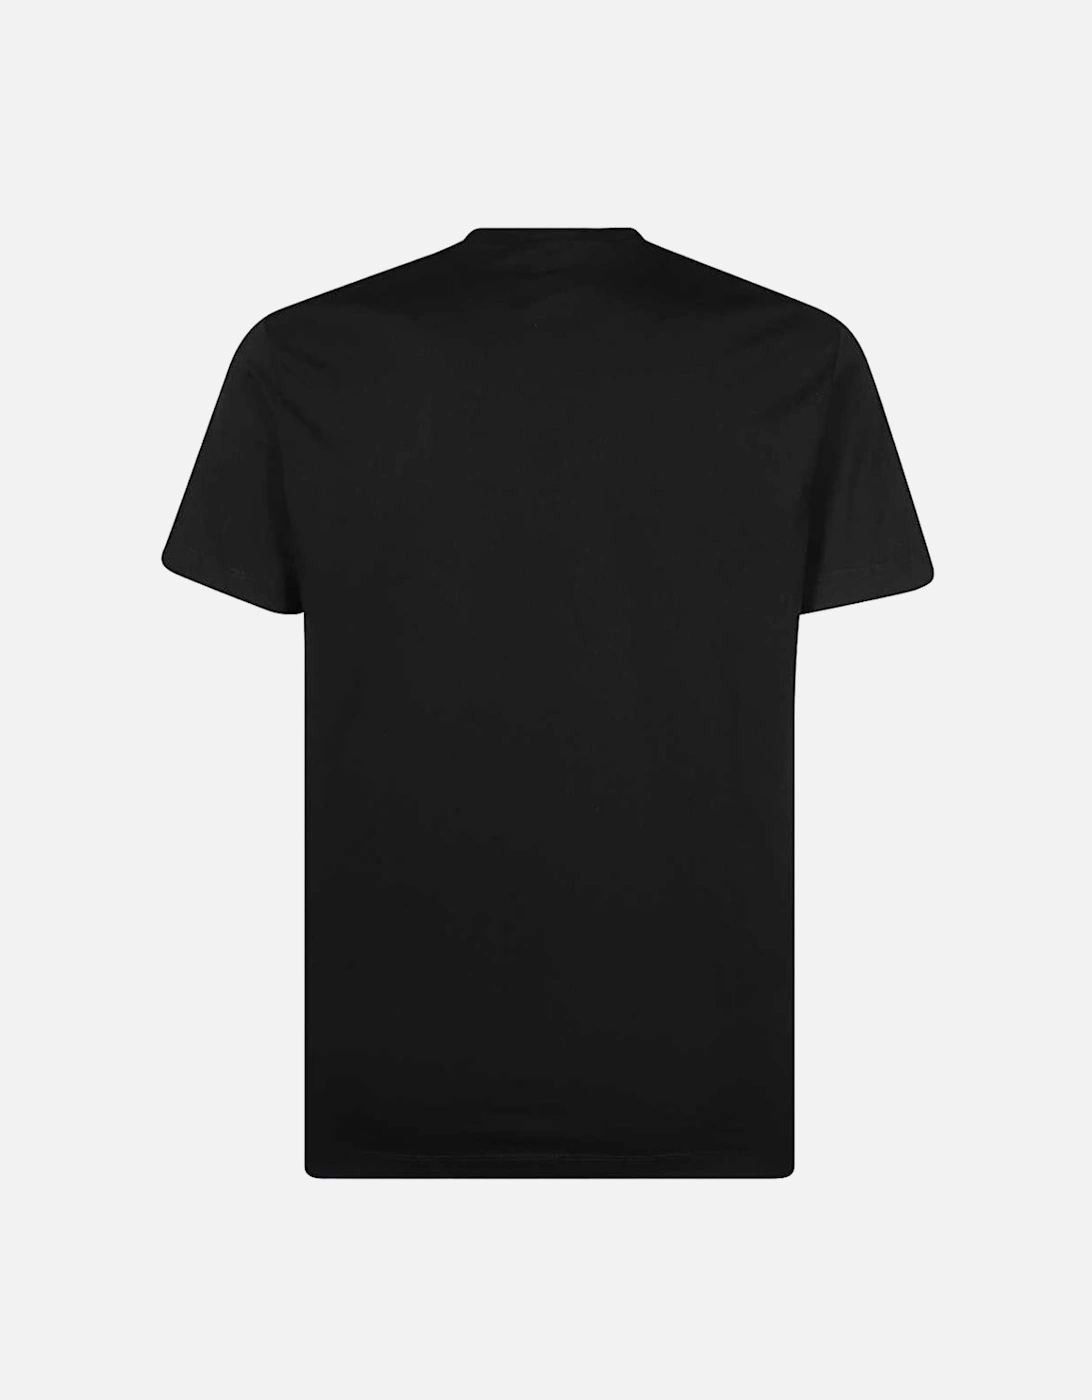 Techno Maple Leaf Oversize Black T-Shirt